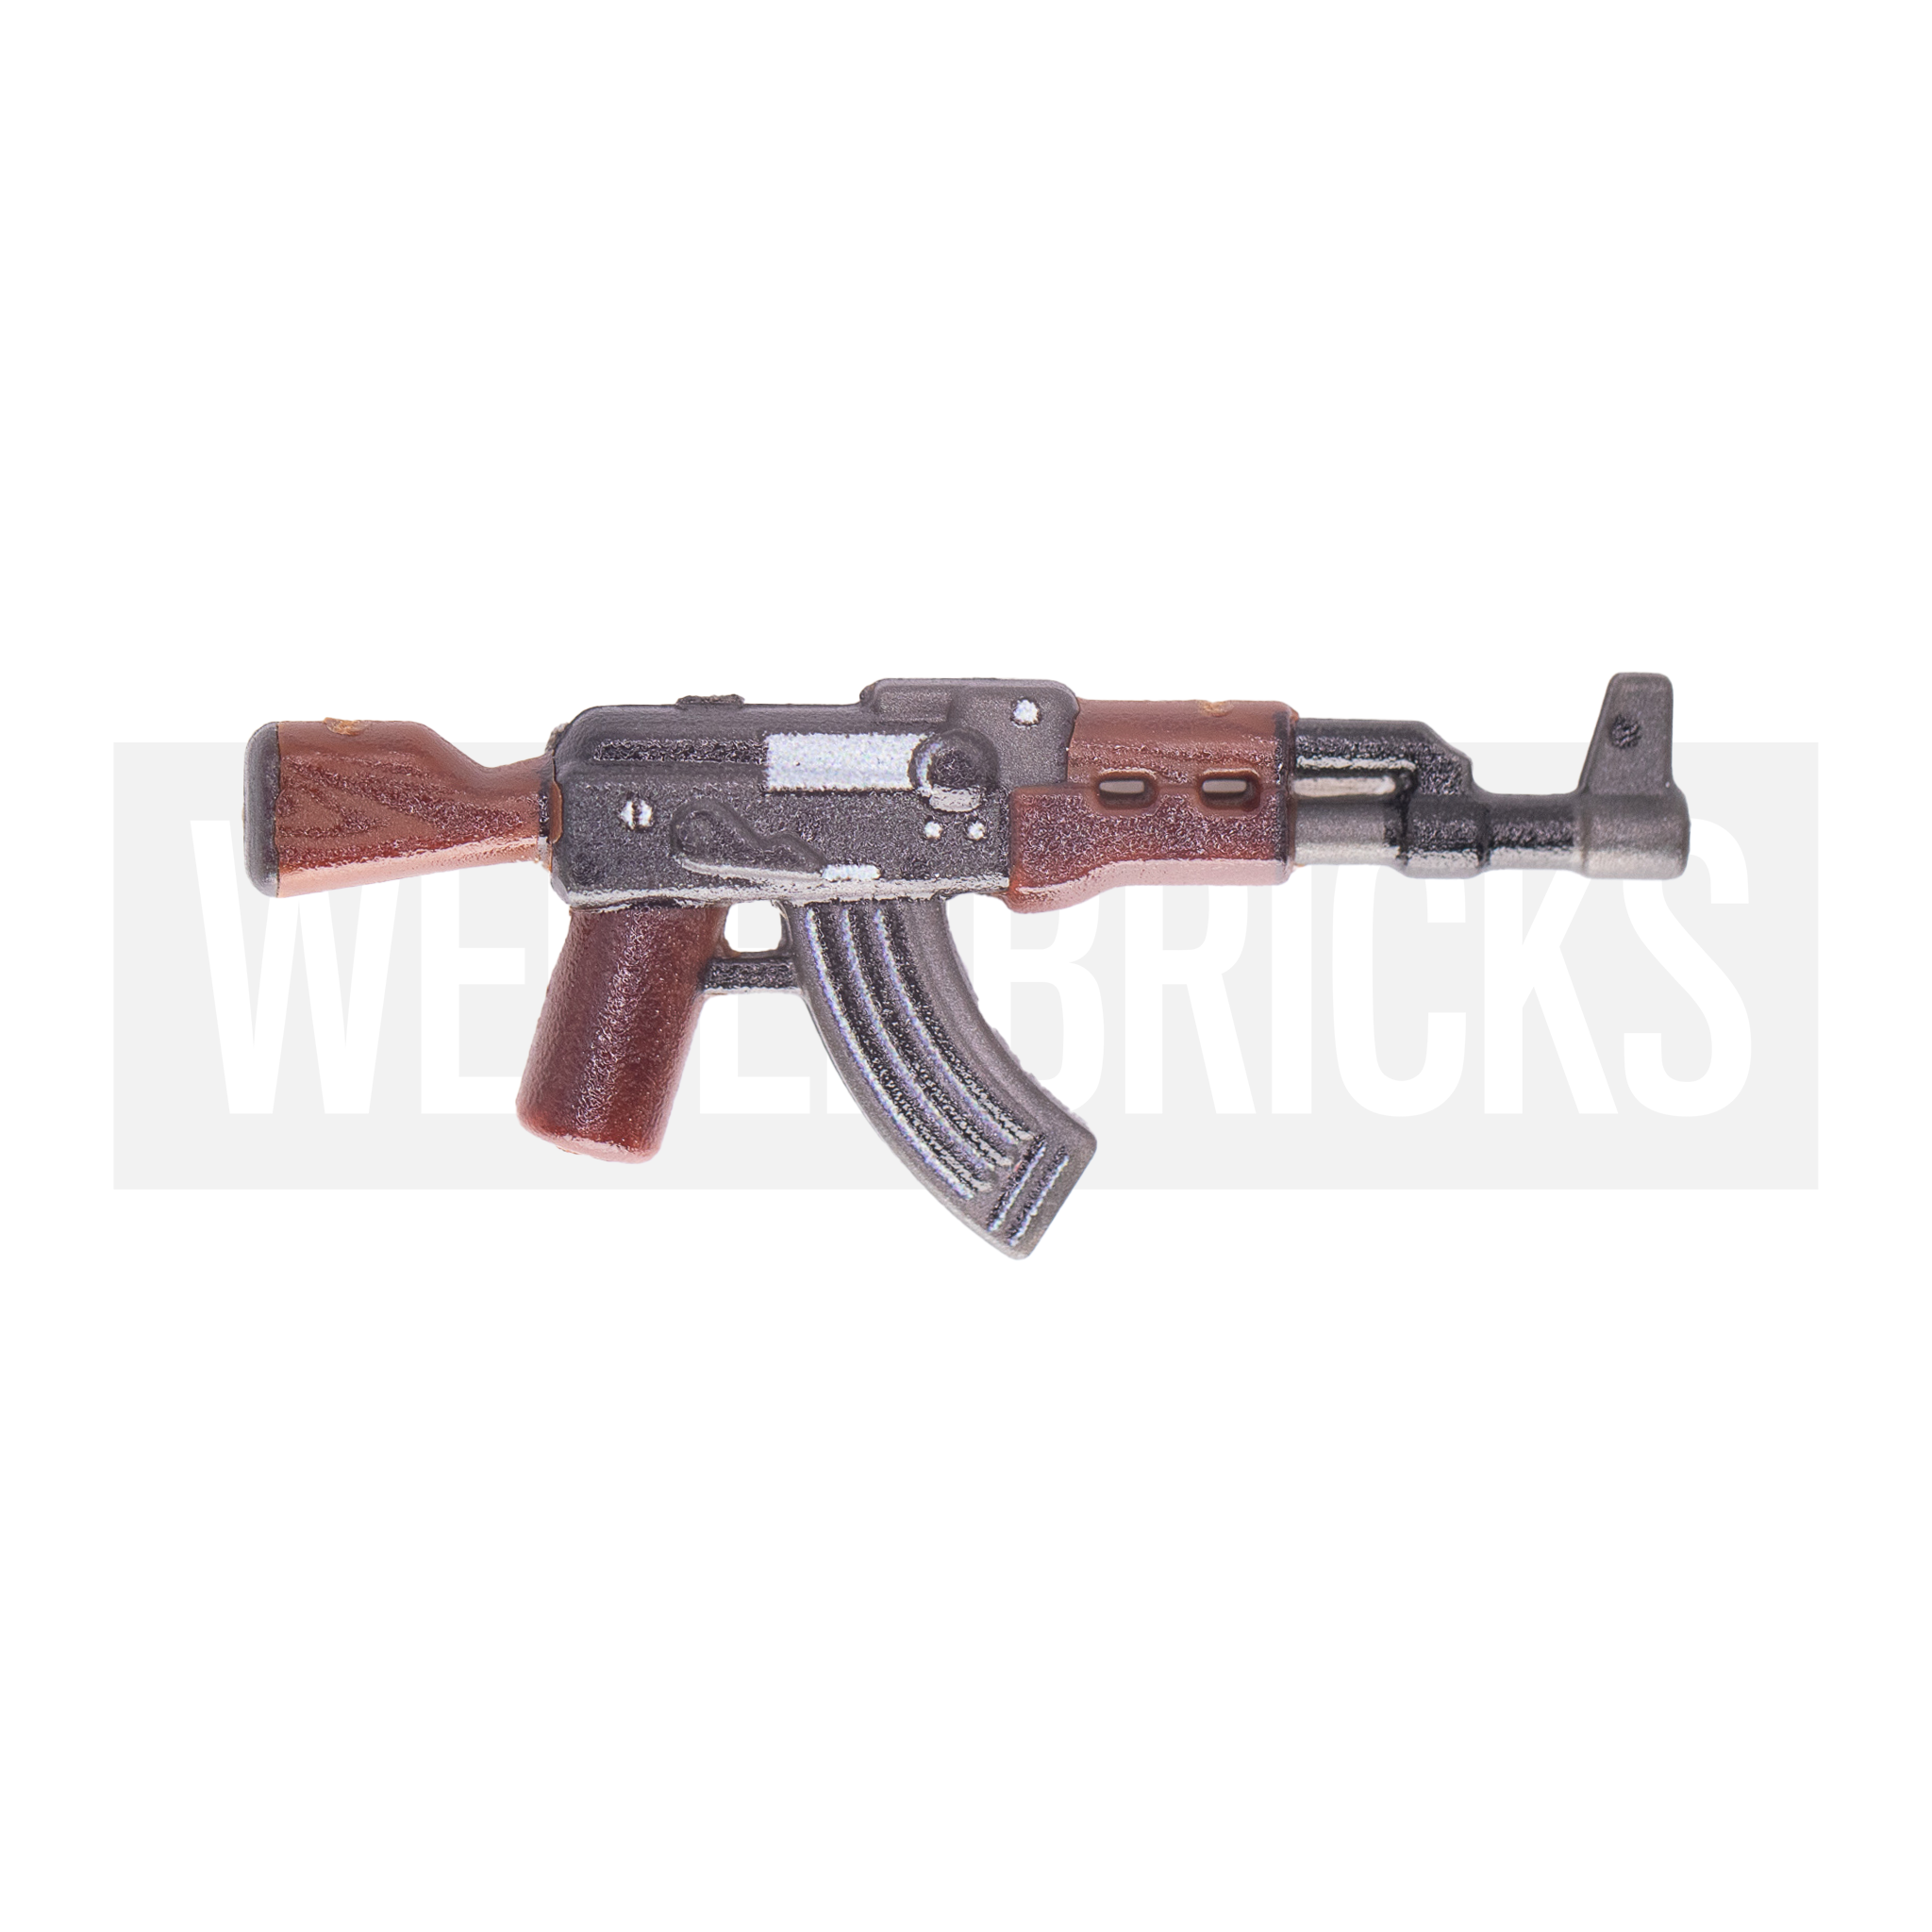 AK-47 Printed - Leyile Brick